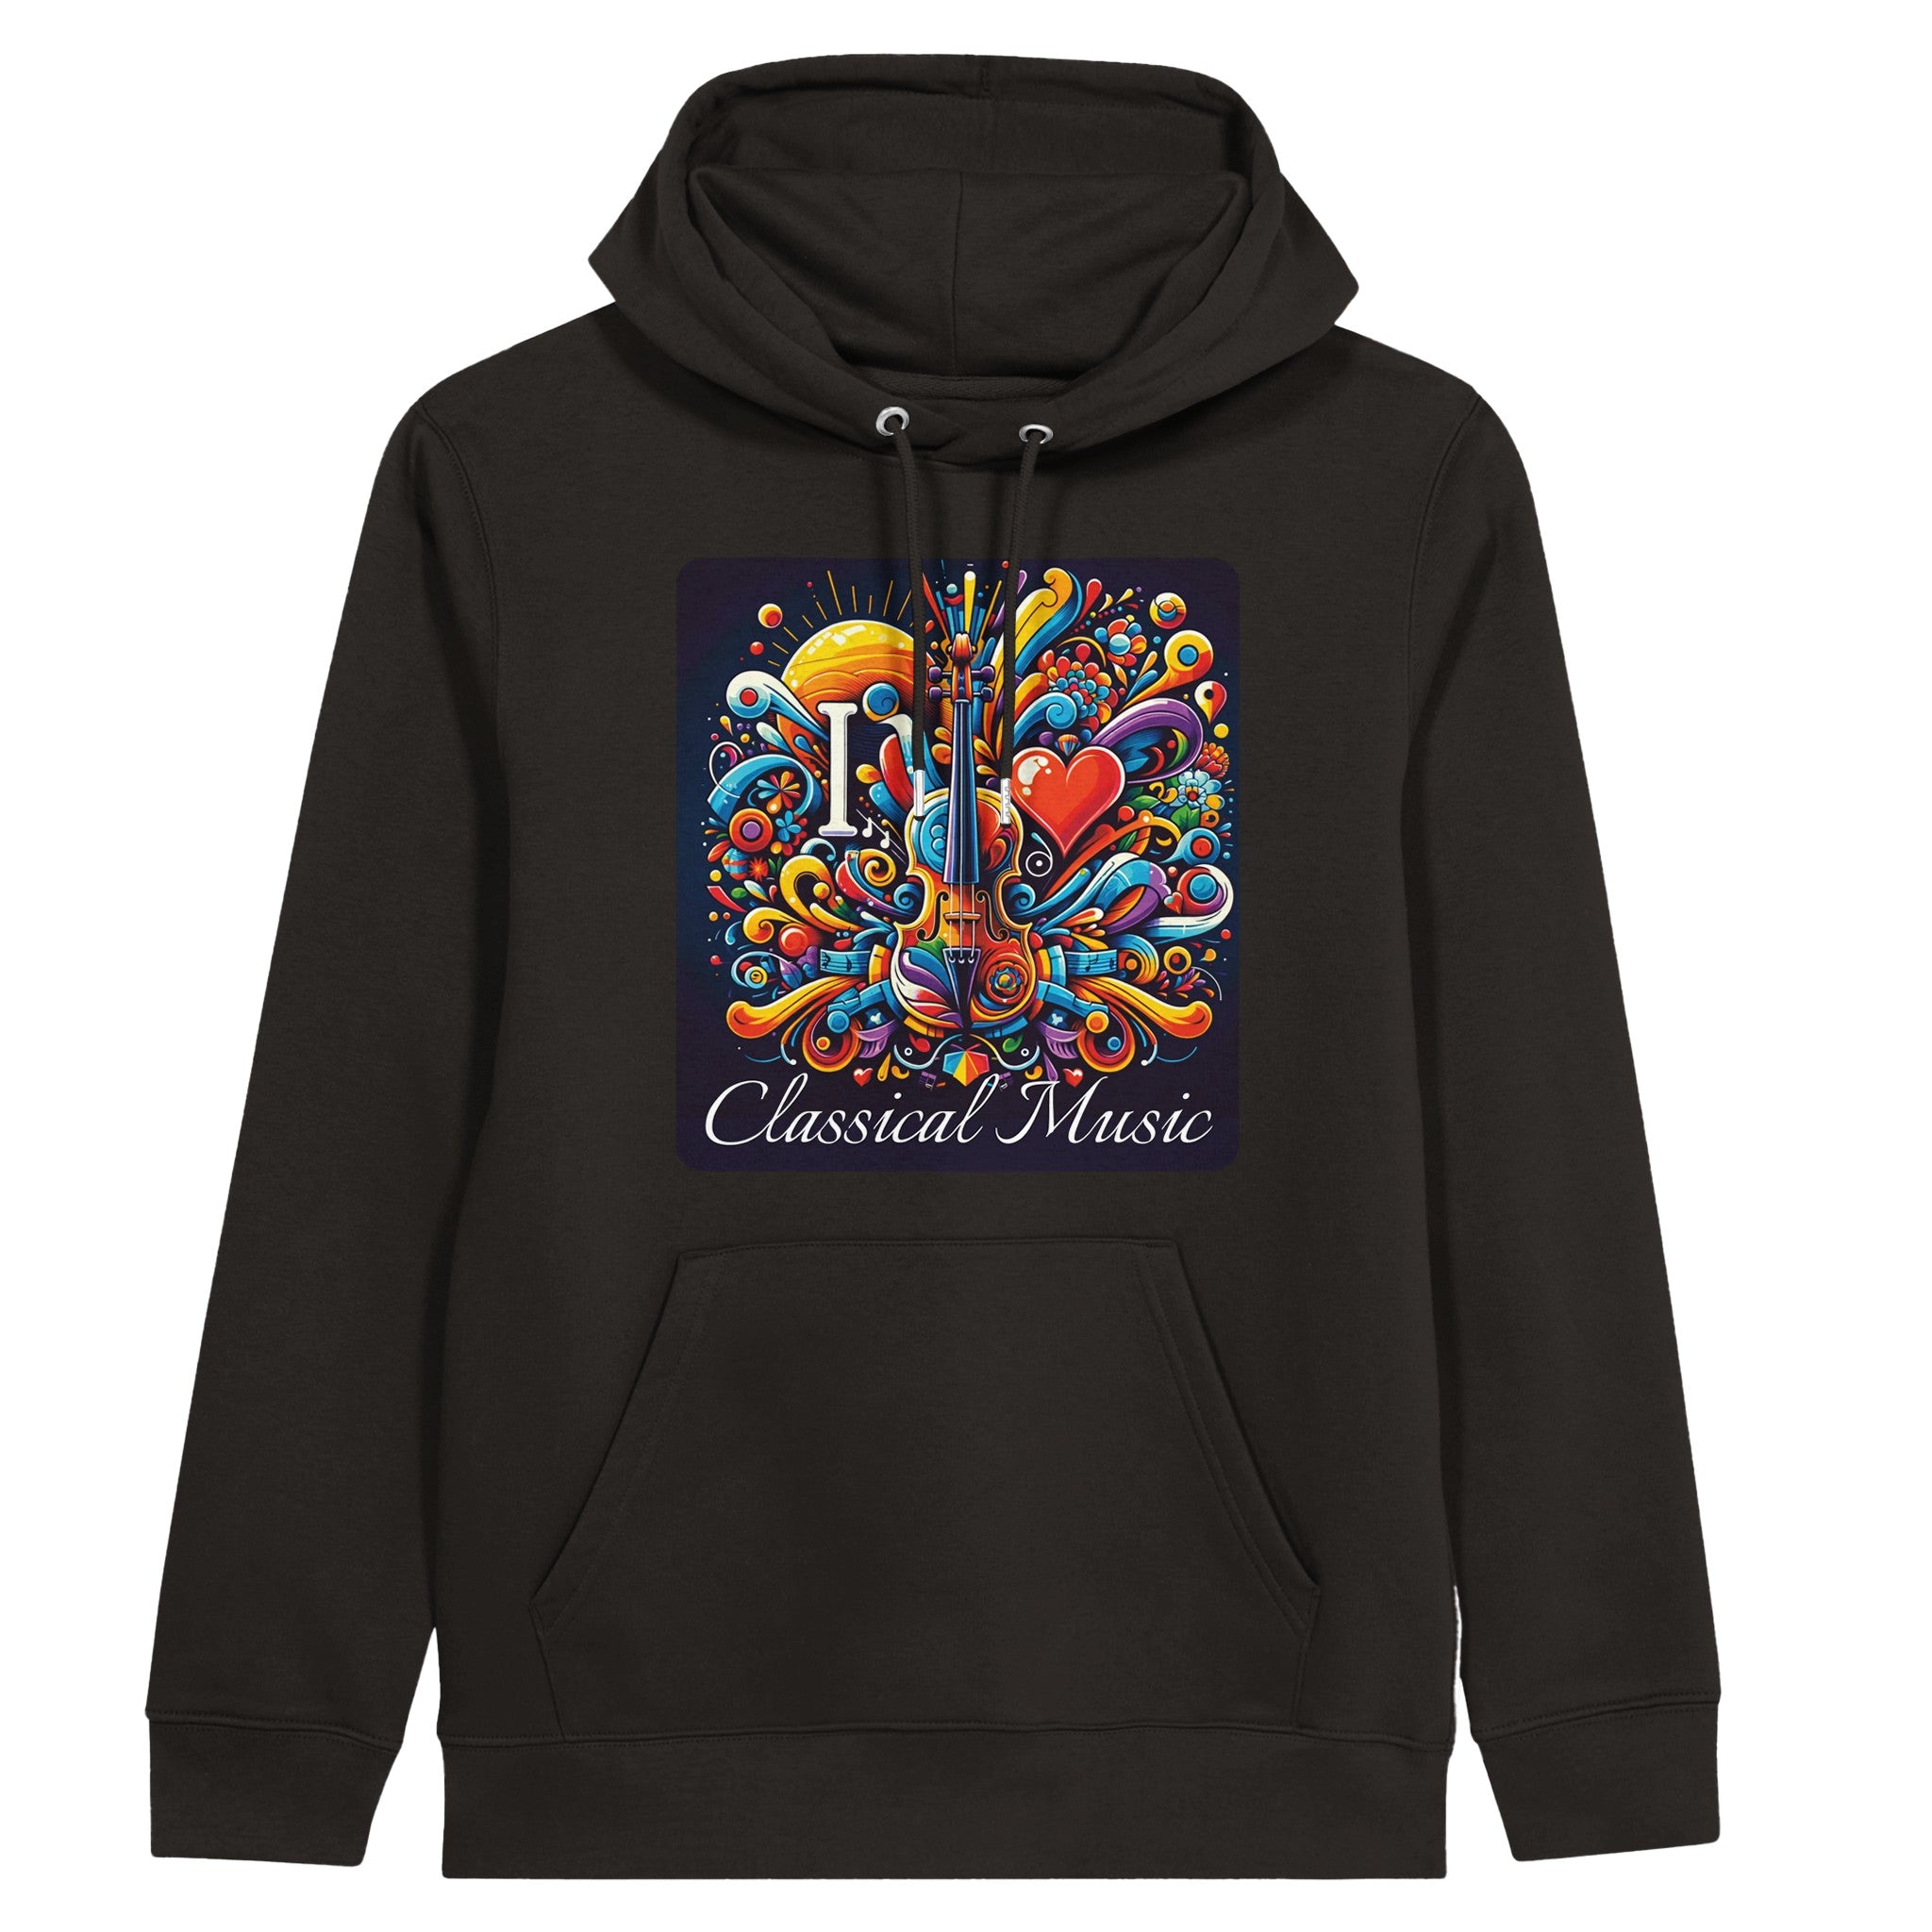 "I love Classical Music" Økologisk unisex hoodie